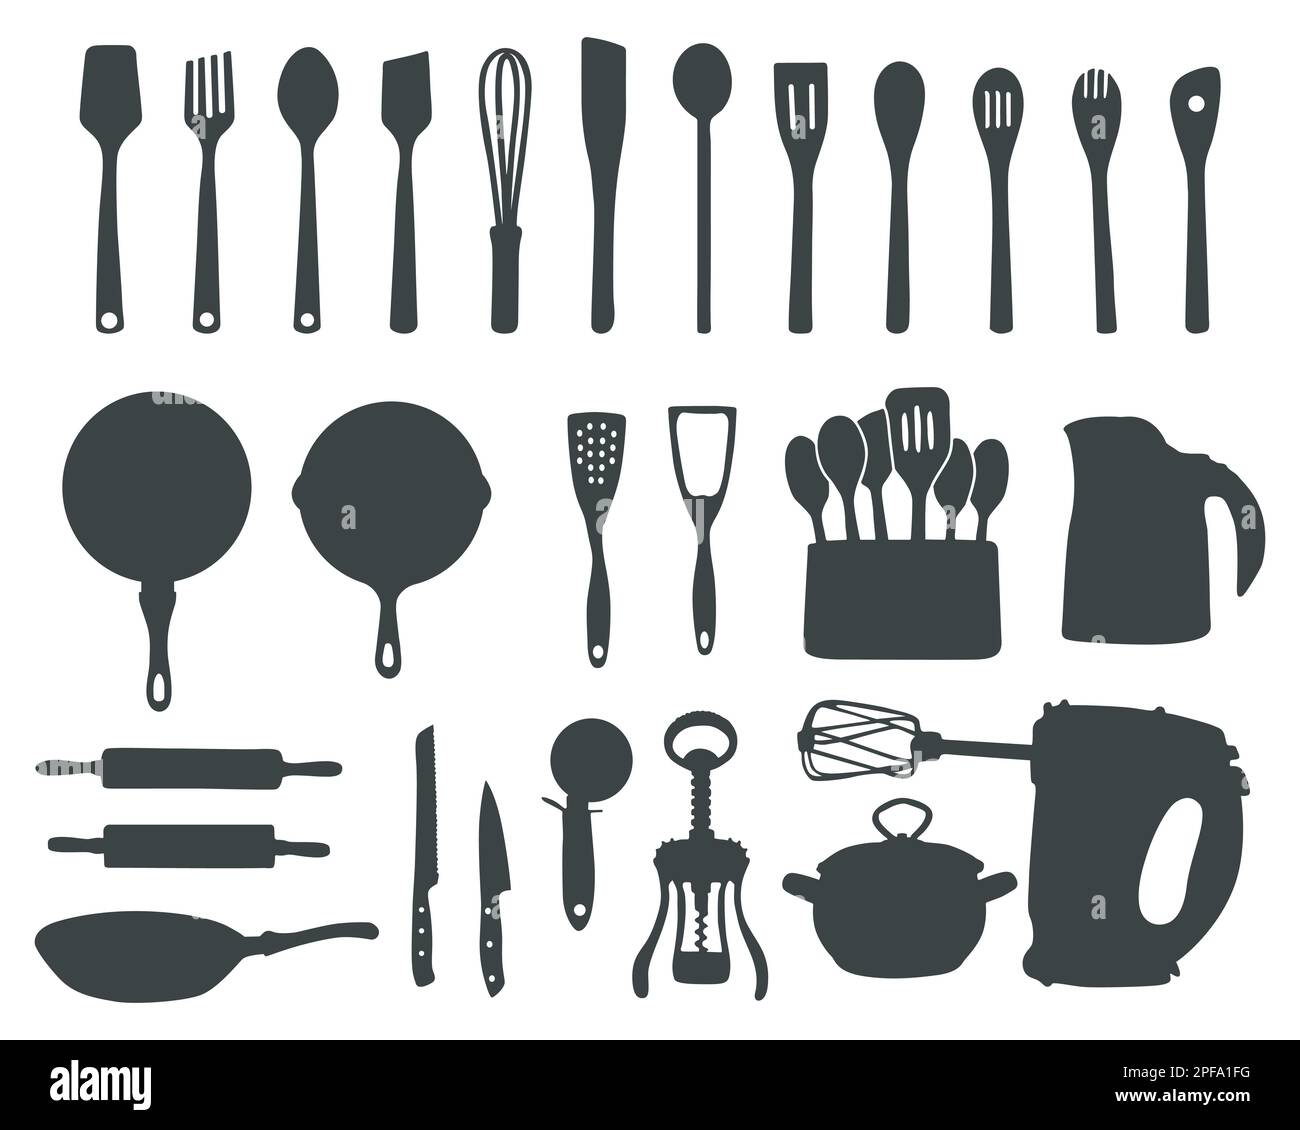 Küchenwerkzeuge Silhouette, Küchenutensilien Silhouette, Kochwerkzeuge SVG Stock Vektor